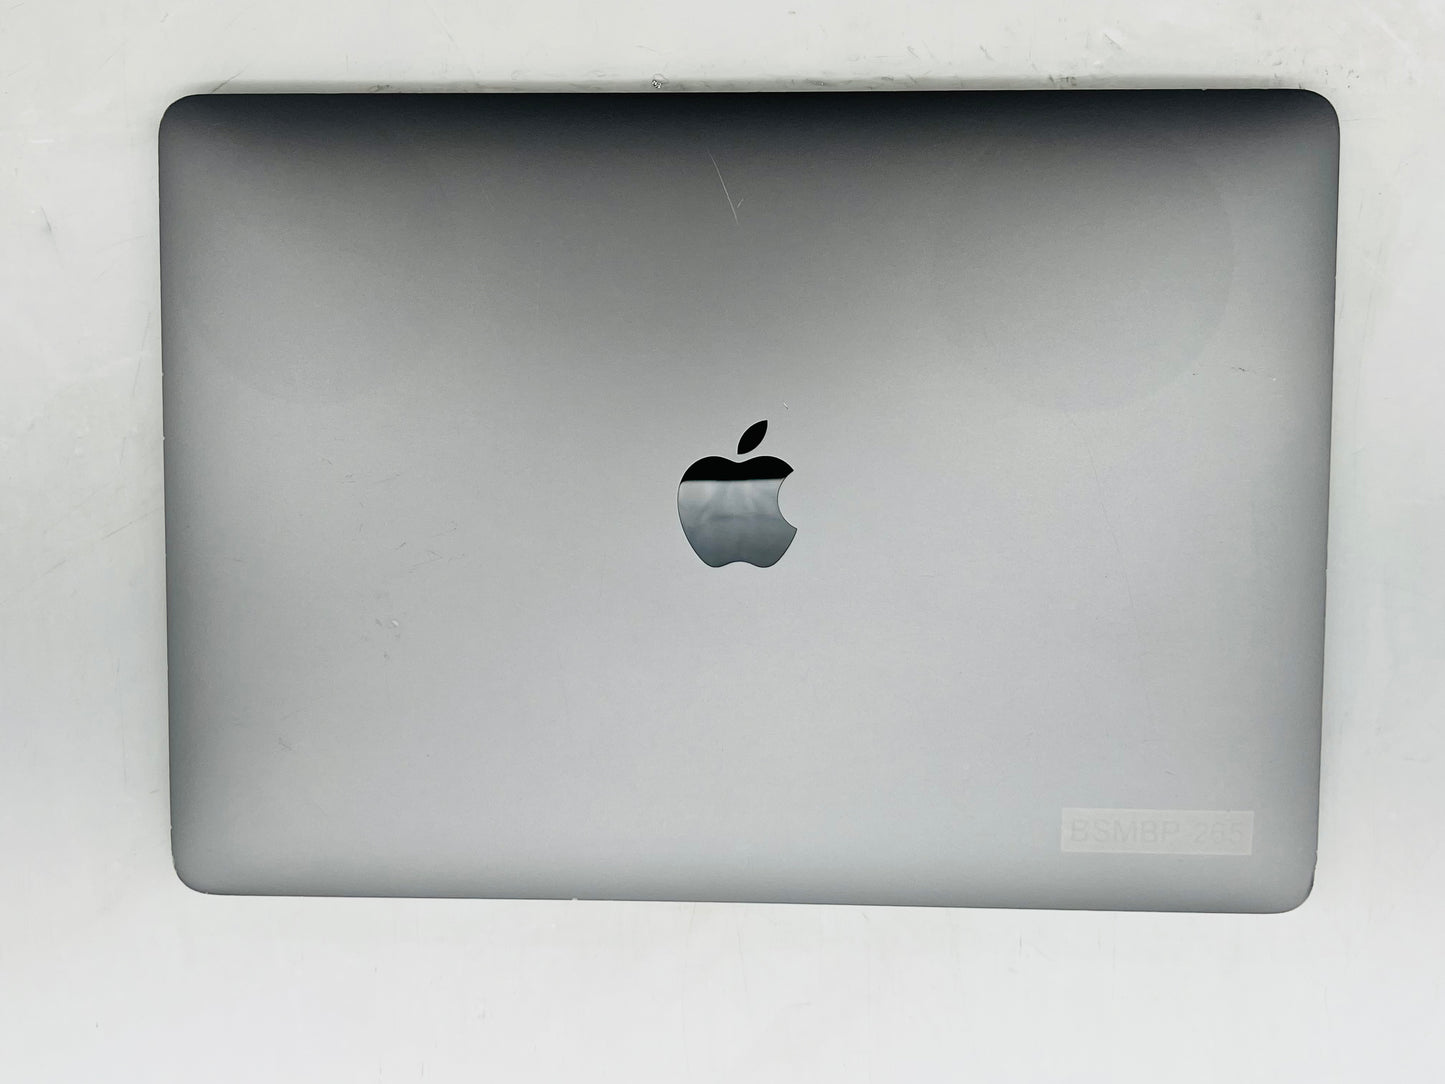 Apple 2020 MacBook Pro 13 in 1.4GHz i5 8GB RAM 512GB SSD IIPG1536 - Good